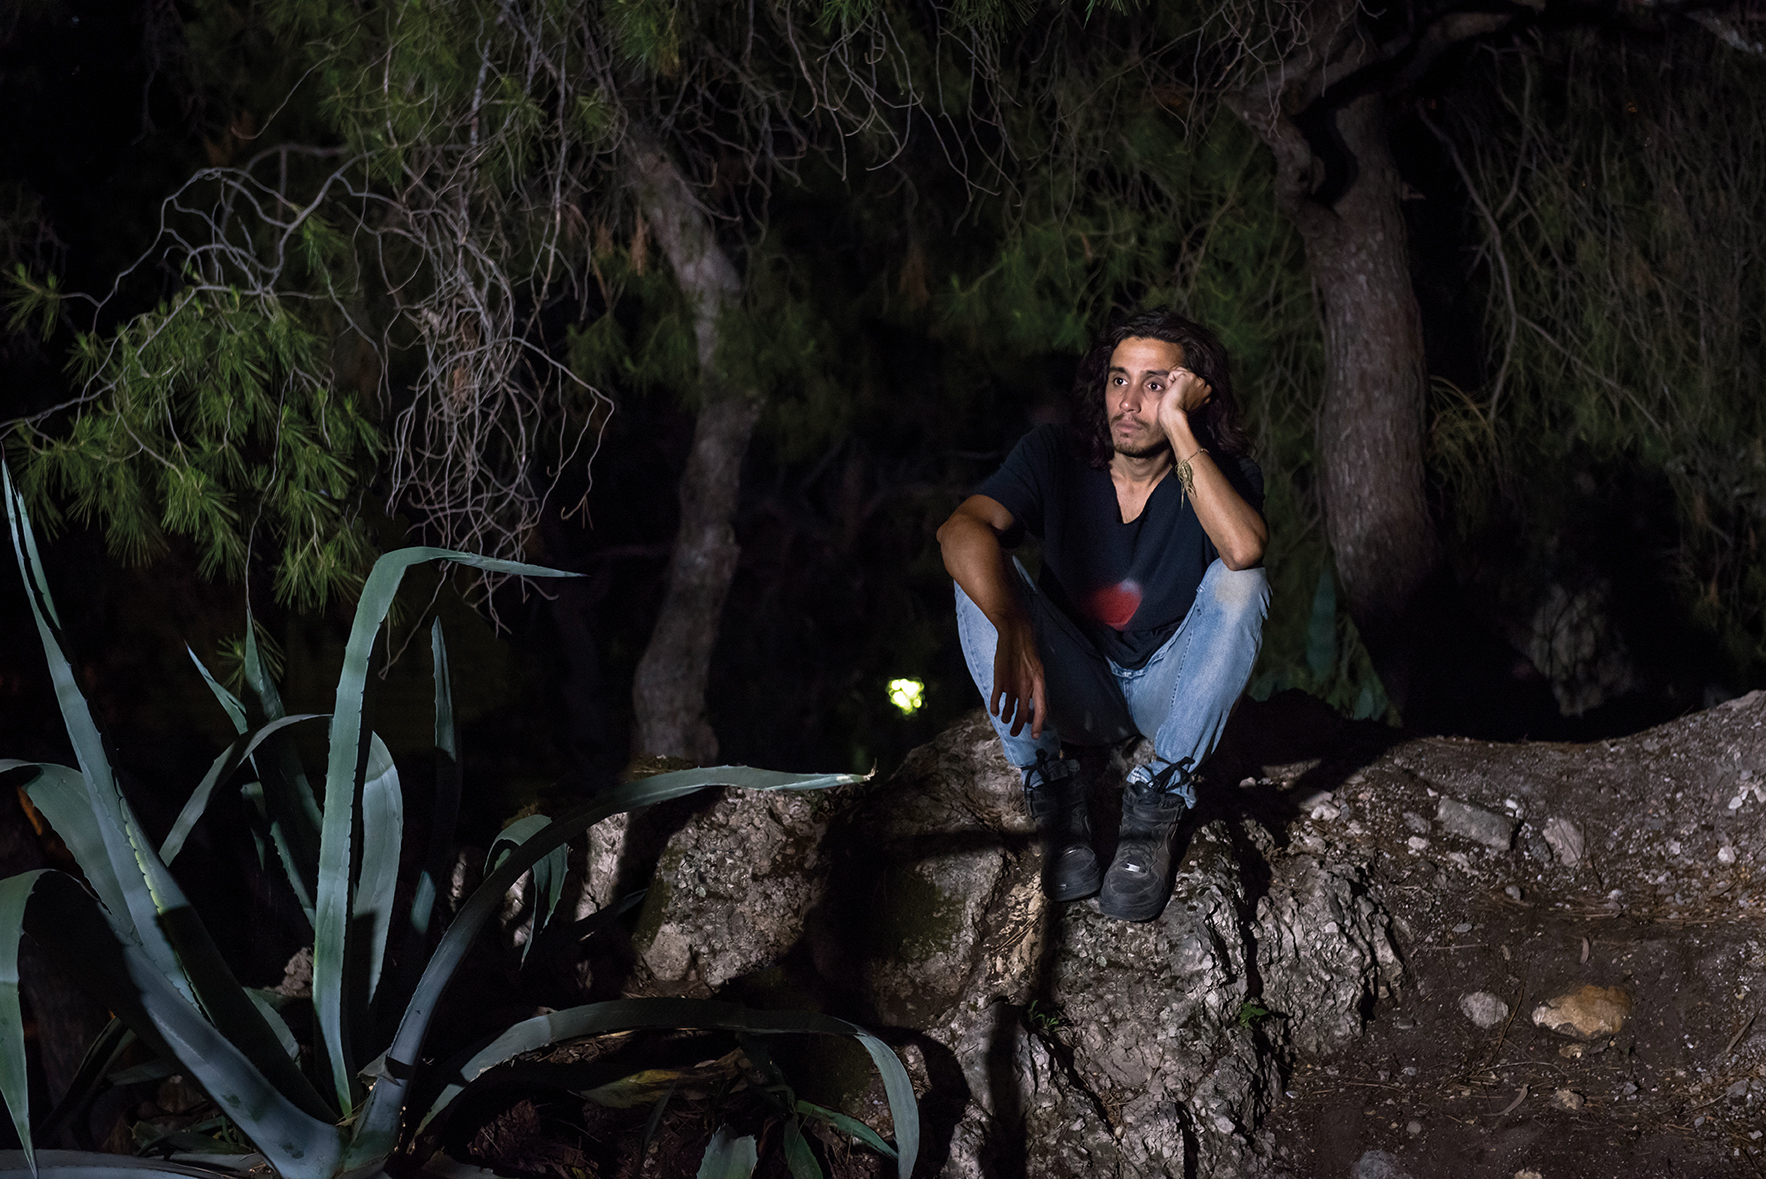 Artist Adrian Villar Rojas in the Woods